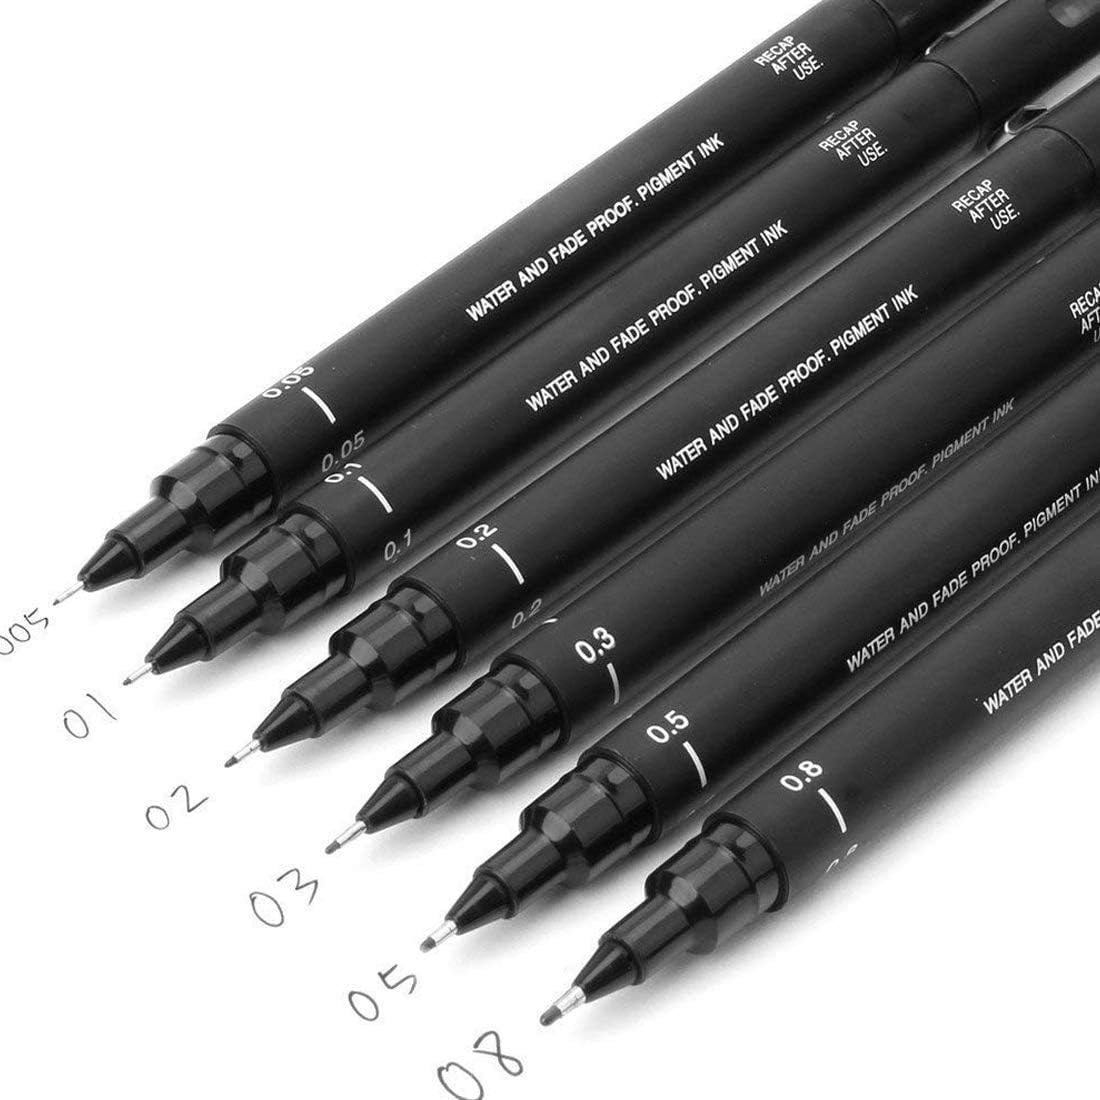 Uni Pin Fineliner Drawing Pen - 9 Grades - Black Ink